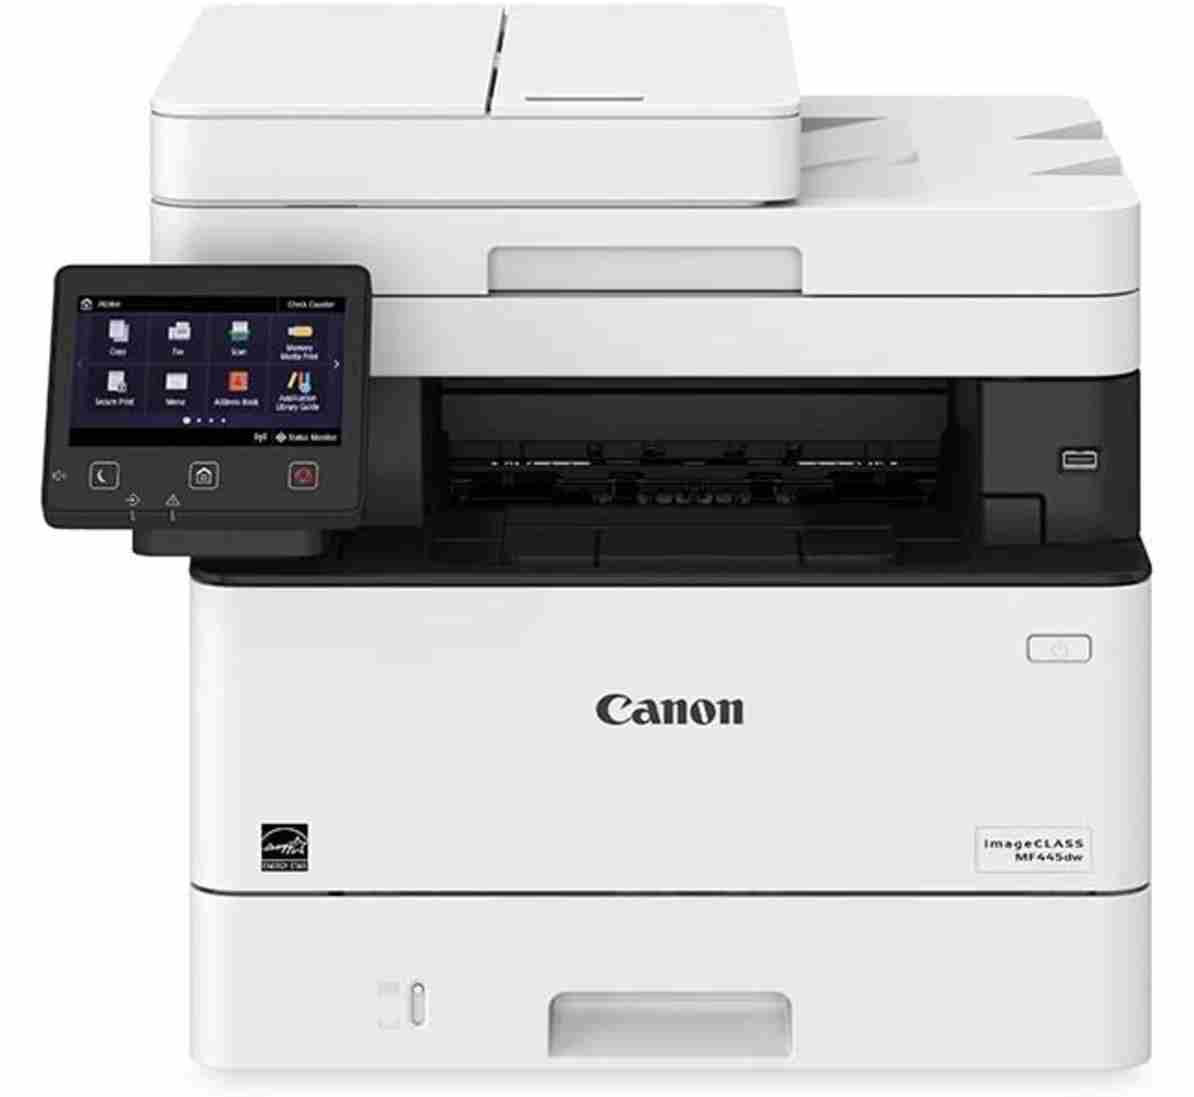 Canon Imageclass MF445dw Printer